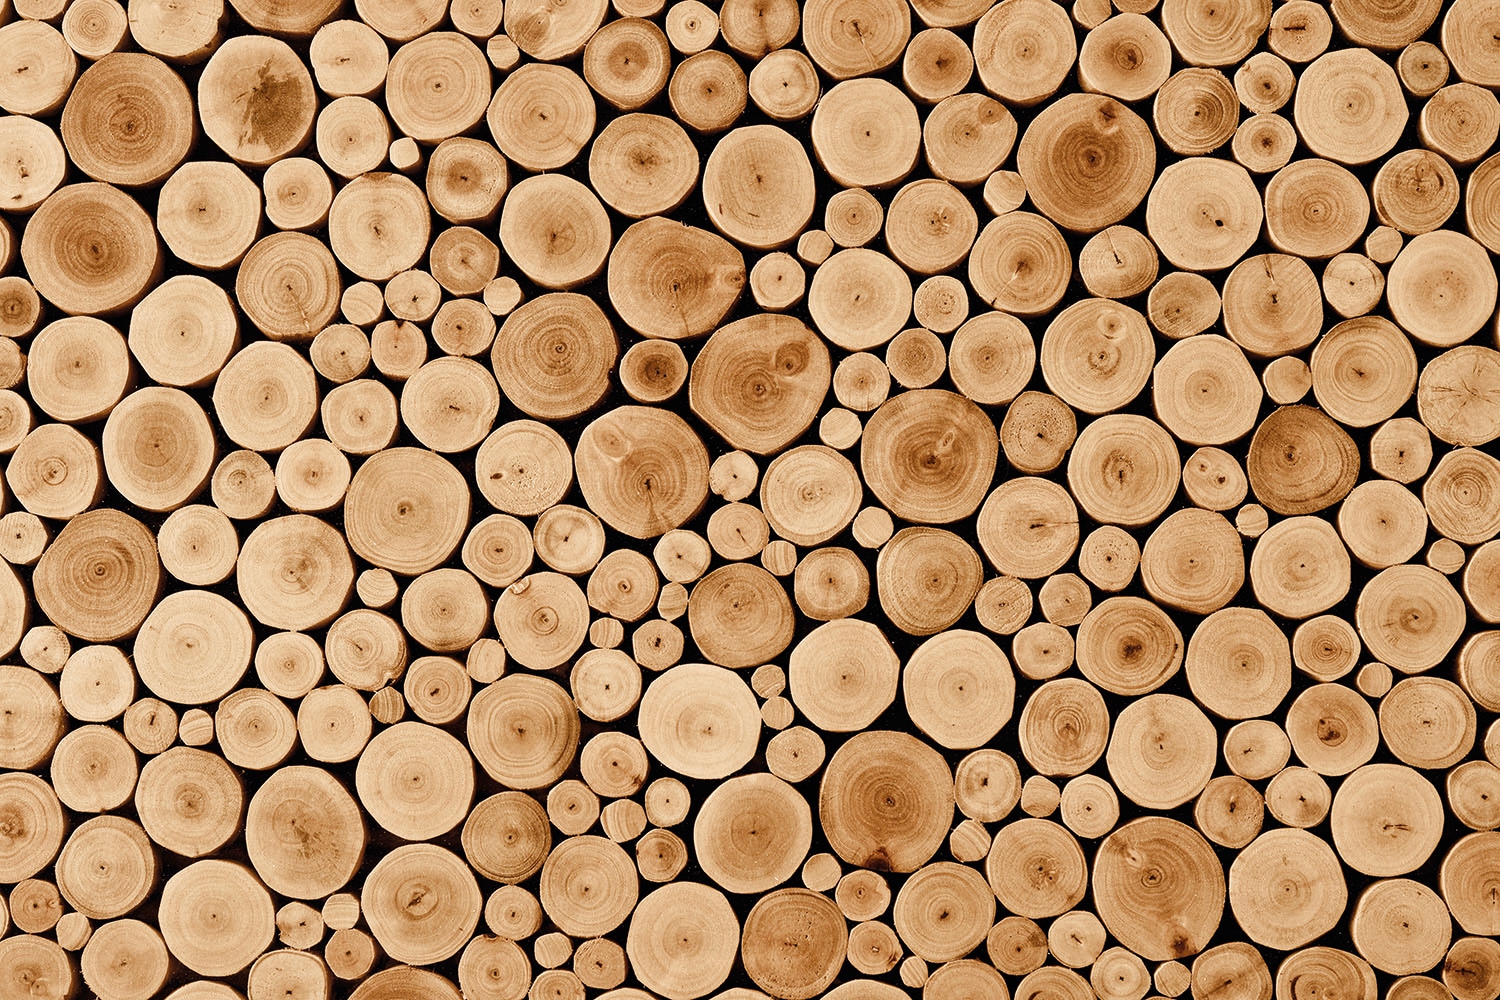 Papermoon Fototapete »Round Teak Wood« von Papermoon